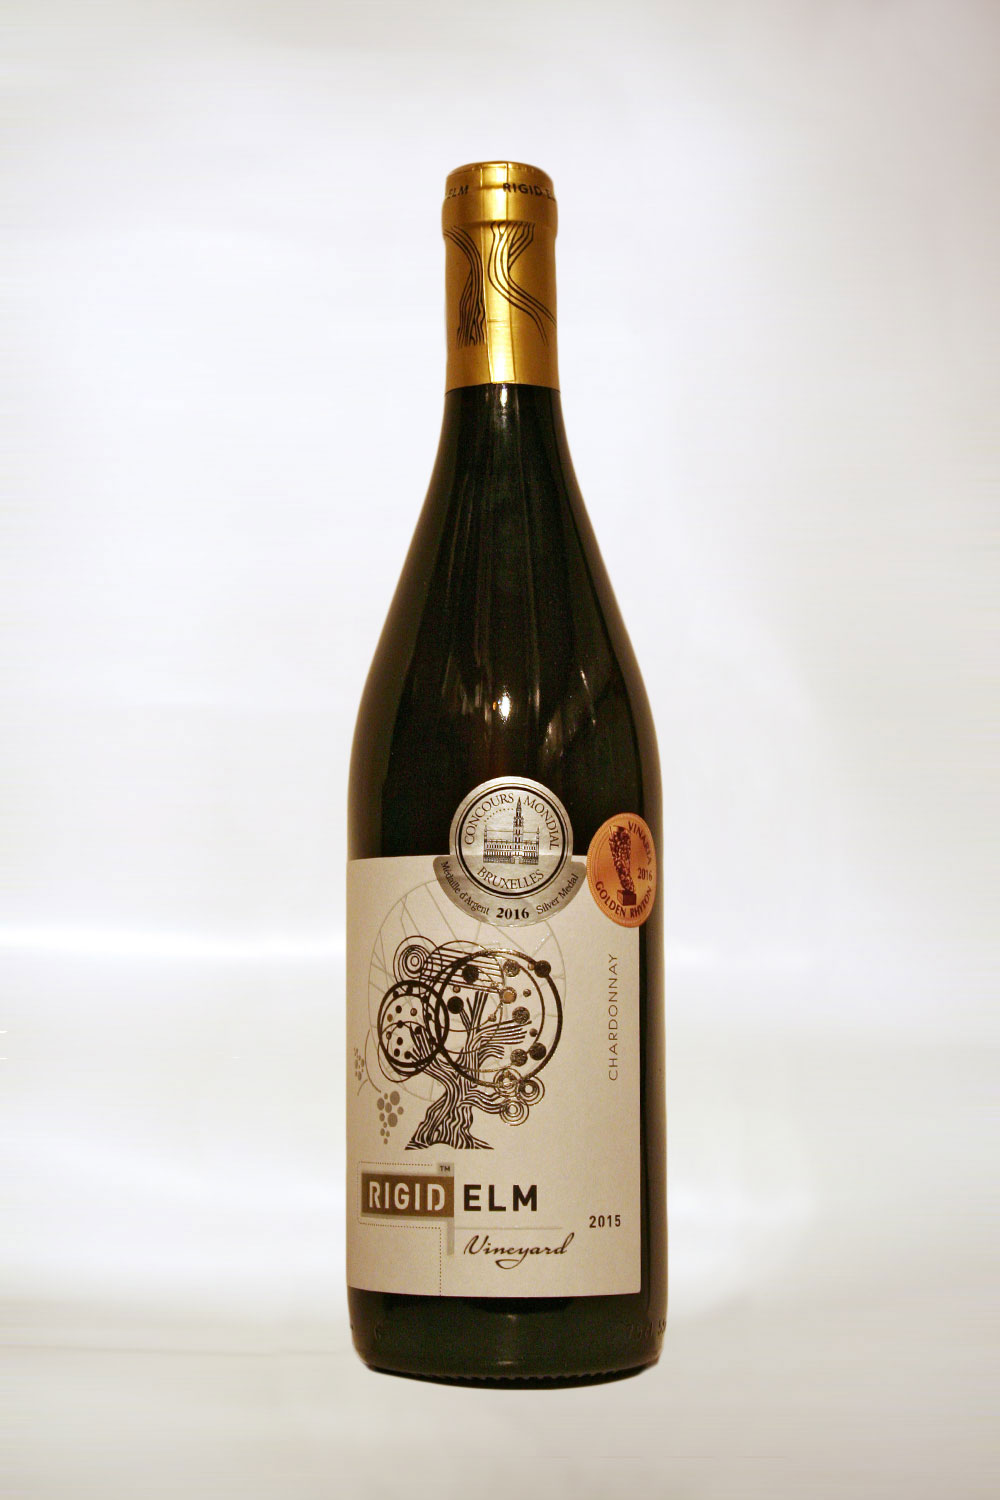 Rigid Elm Chardonnay 2015